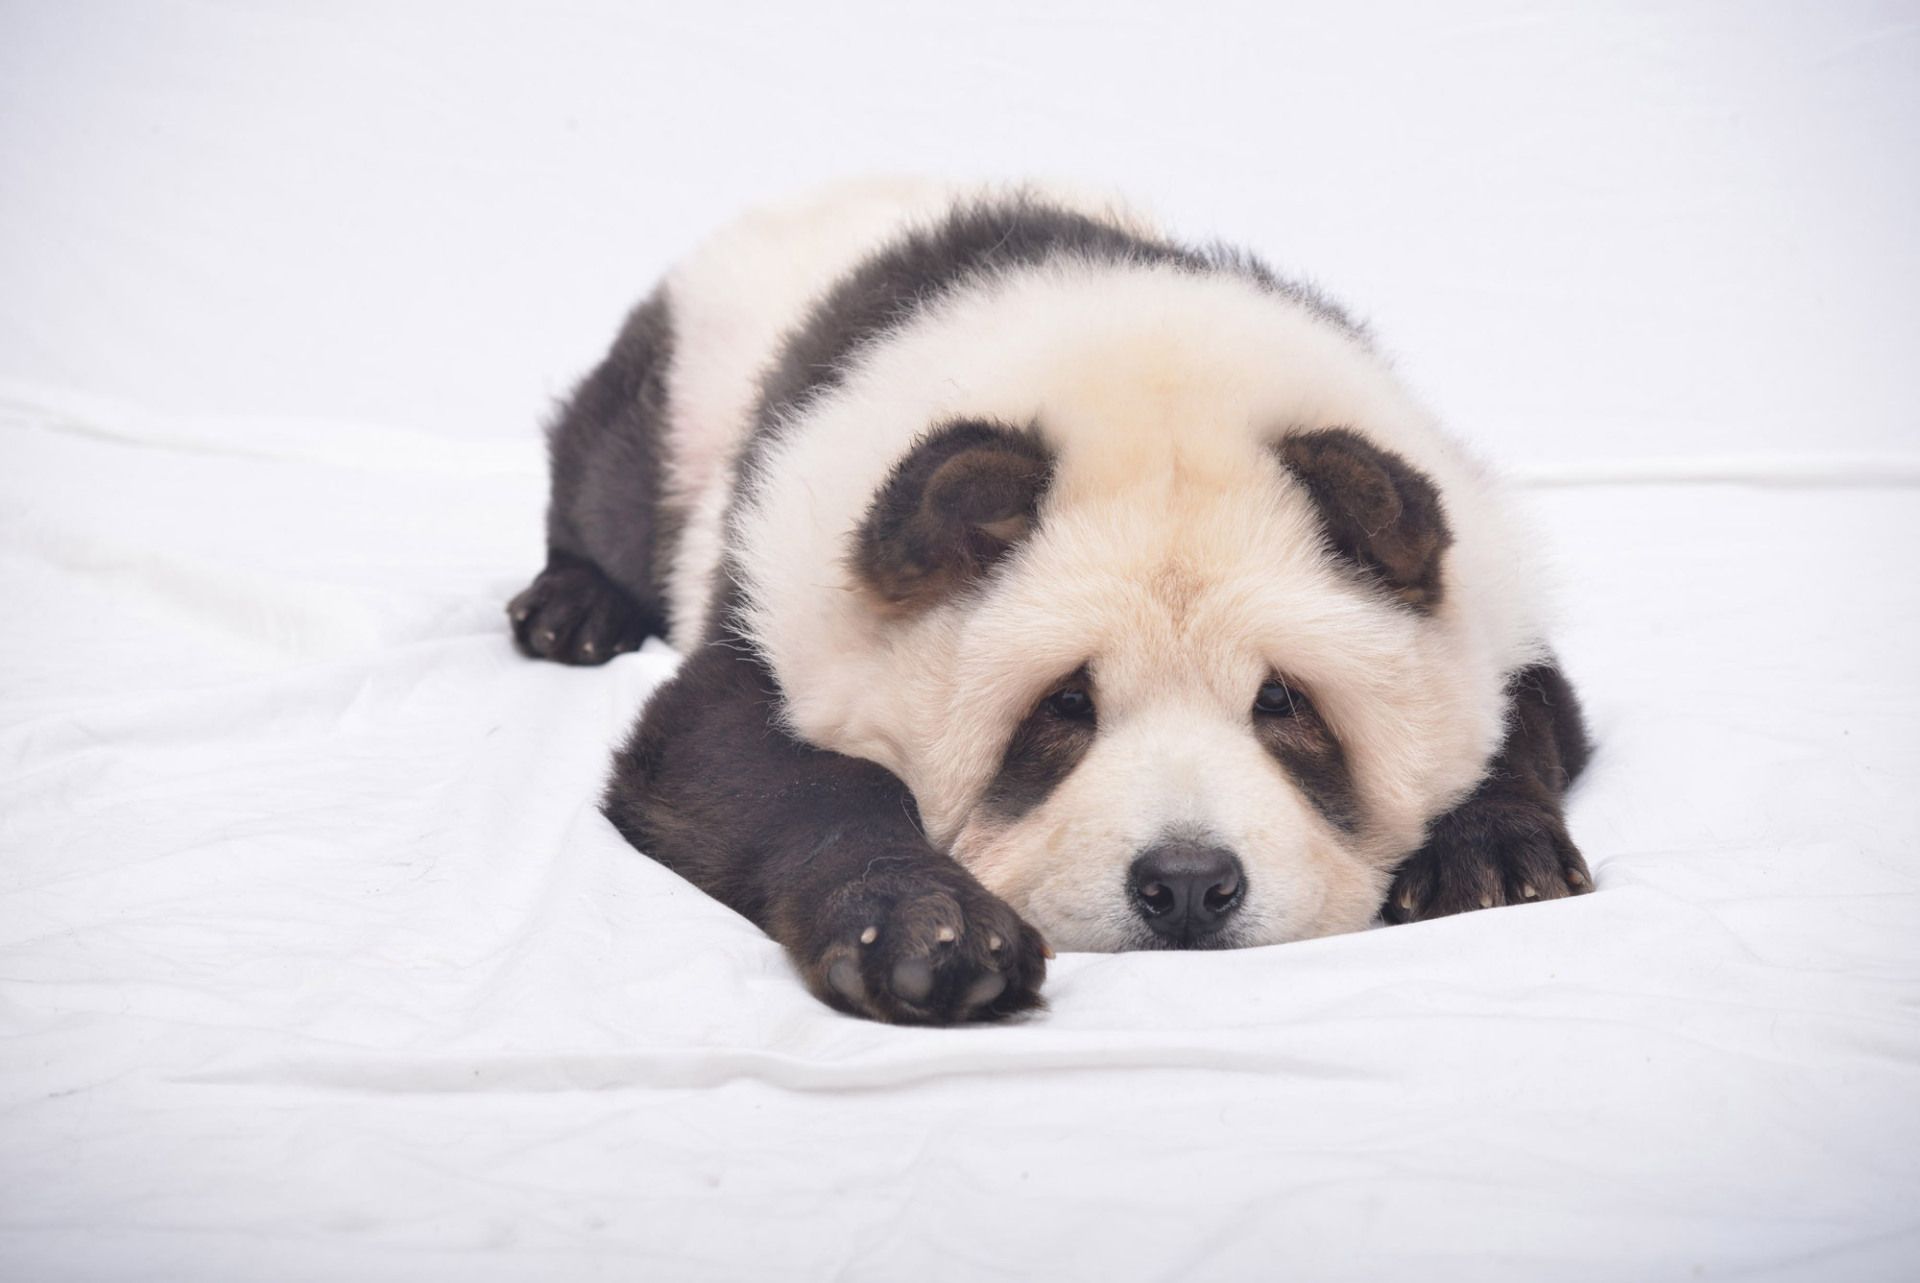 Pandog, in Cina spopolano i cani che assomigliano ai panda